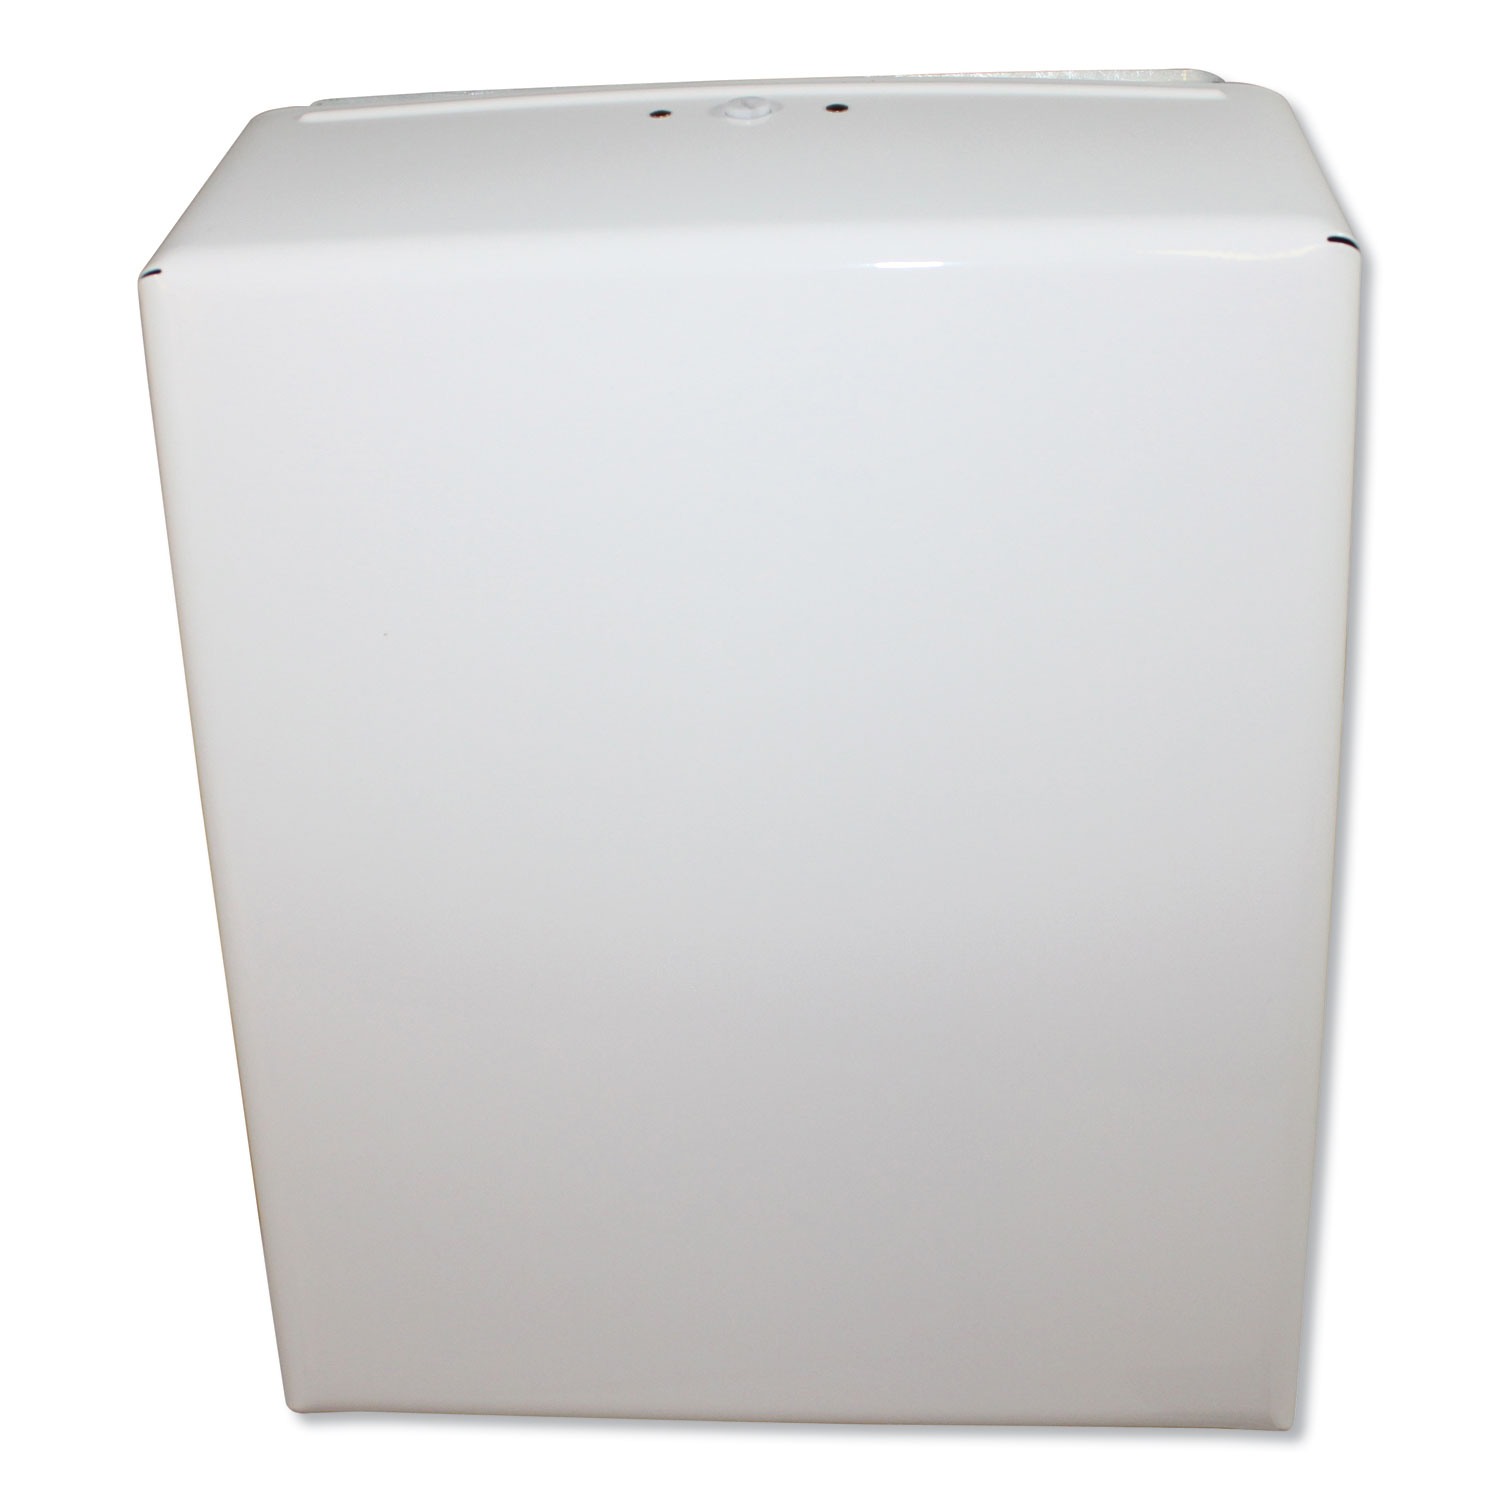  Impact 4090W Metal Combo Towel Dispenser, Metal, 11 x 4.5 x 15.75, Off White (IMP4090W) 